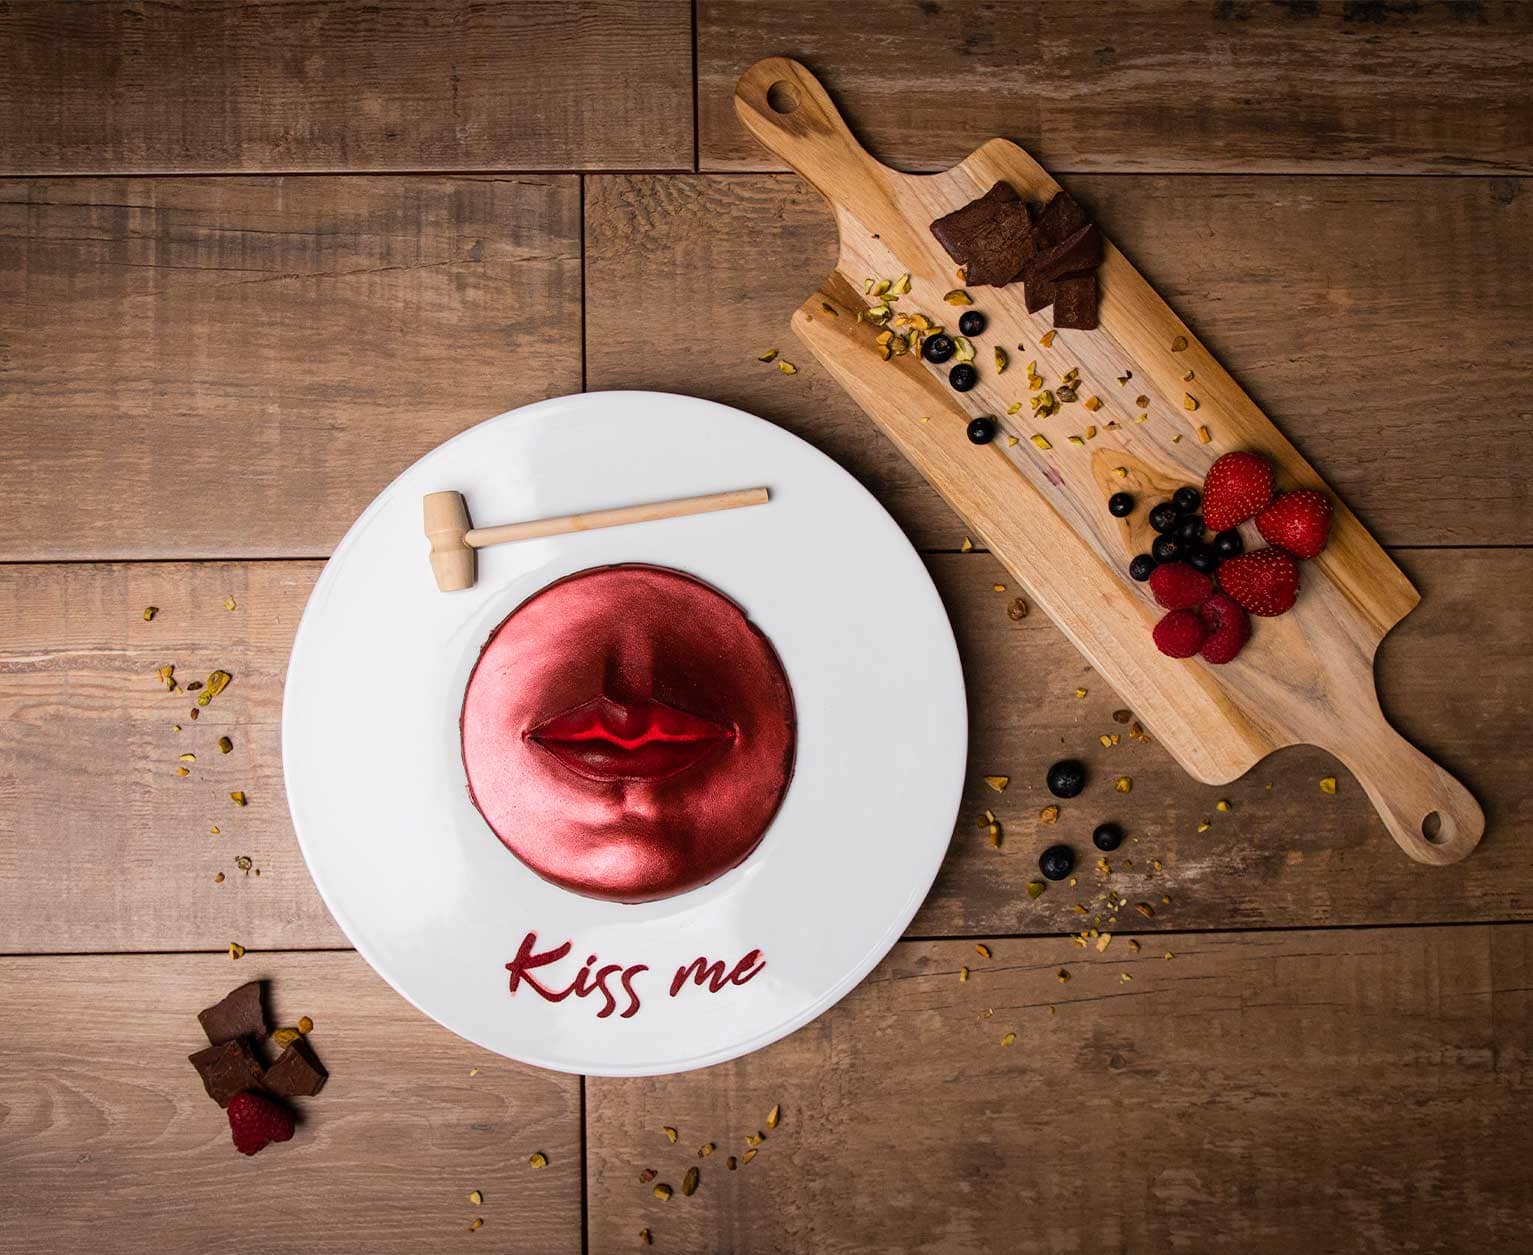 kiss me nicoletta italian kitchen